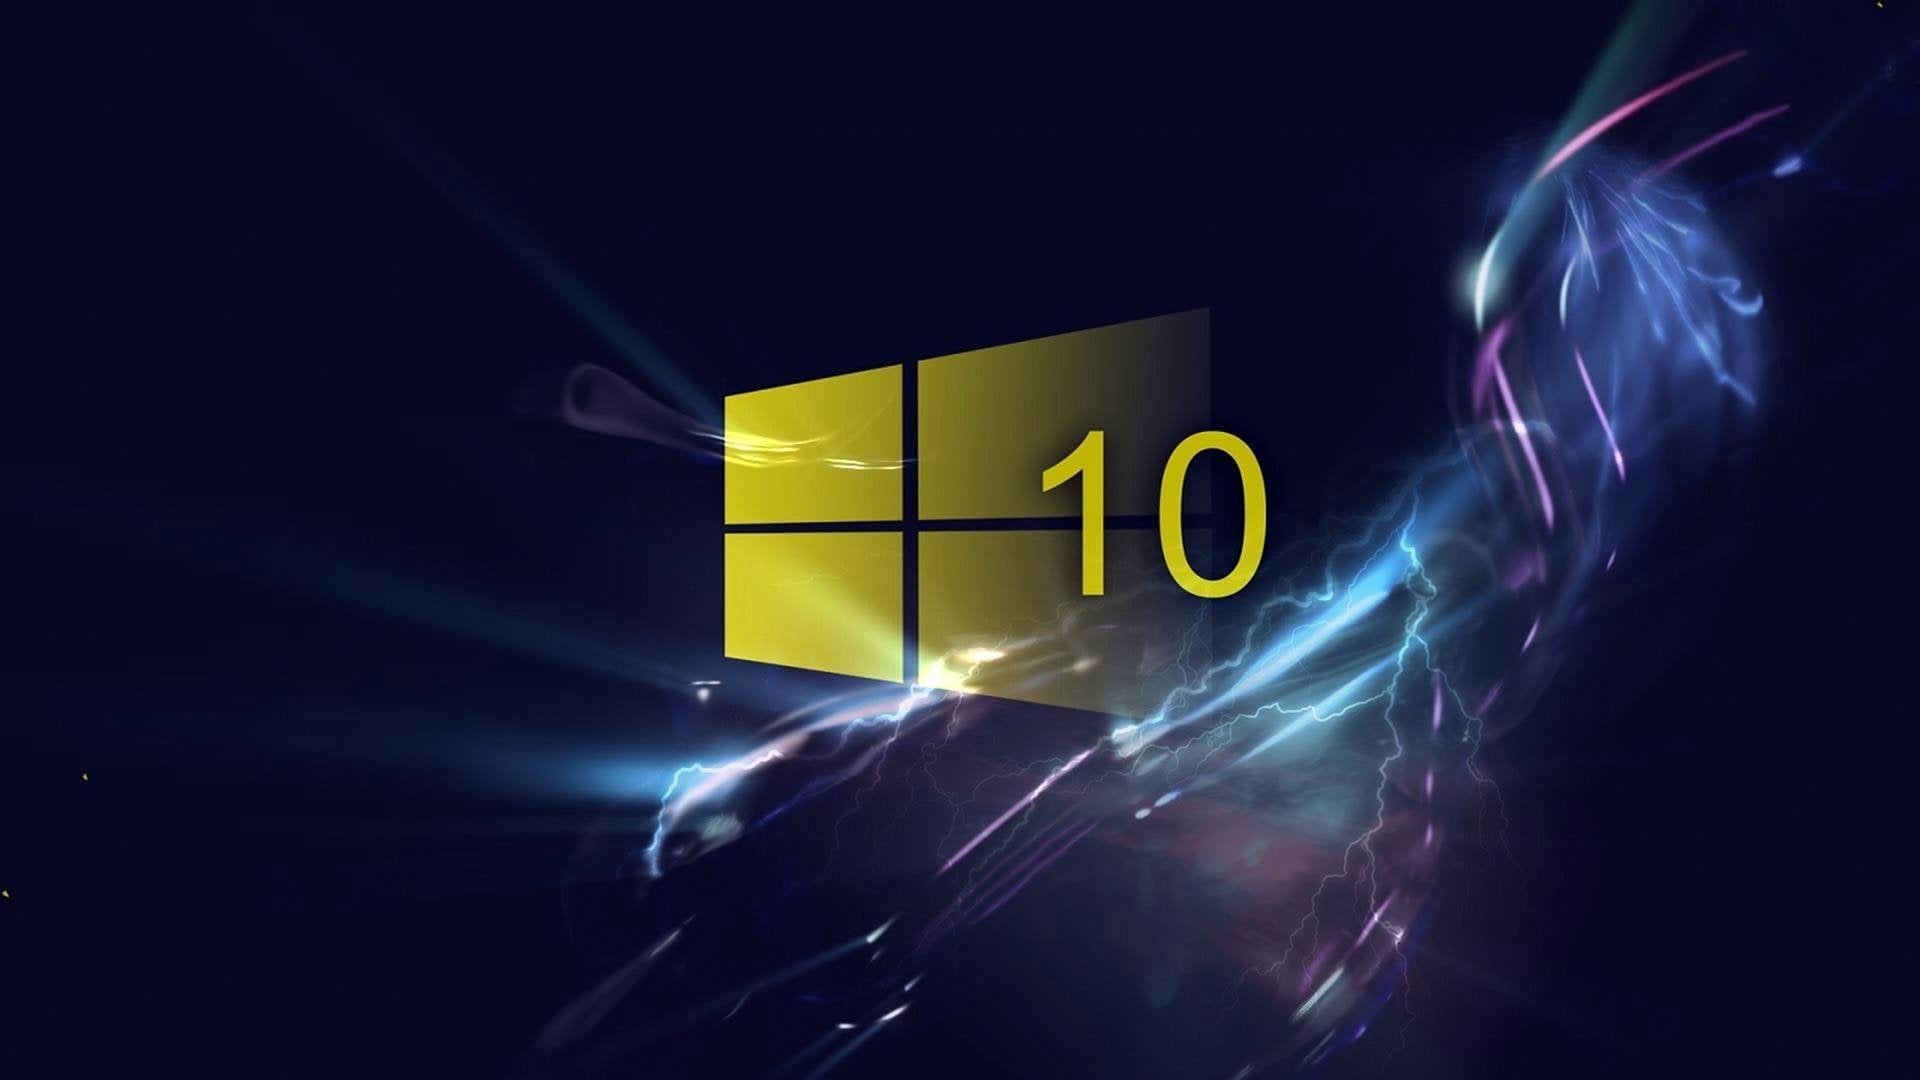 Windows 10 wallpaper, night, illuminated, motion, light – natural phenomenon